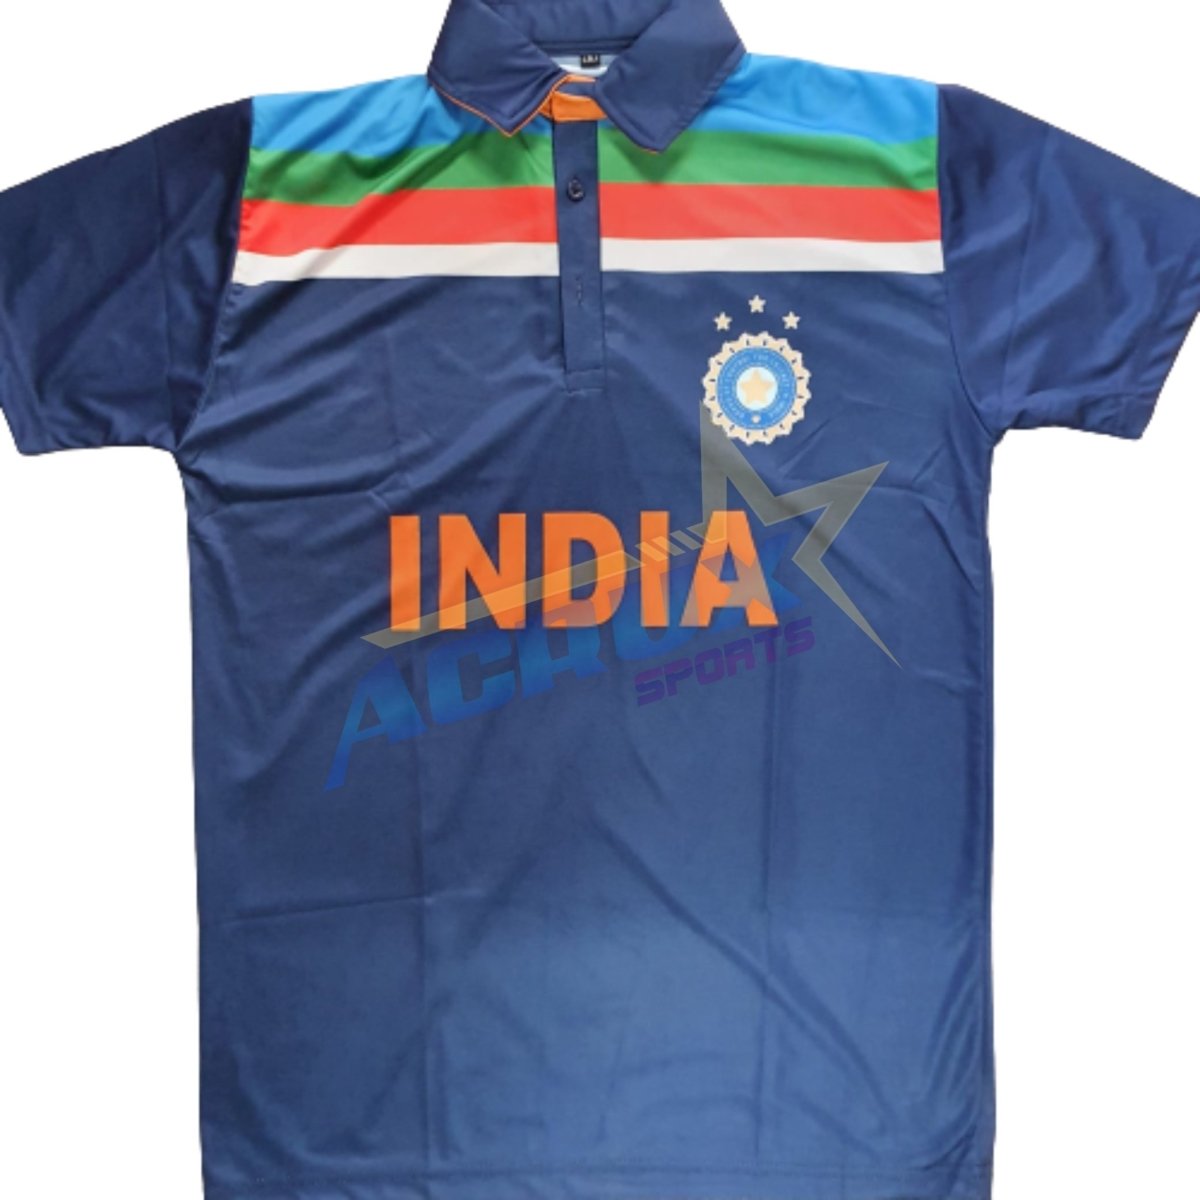 India Cricket Team Retro Supporter Jersey.